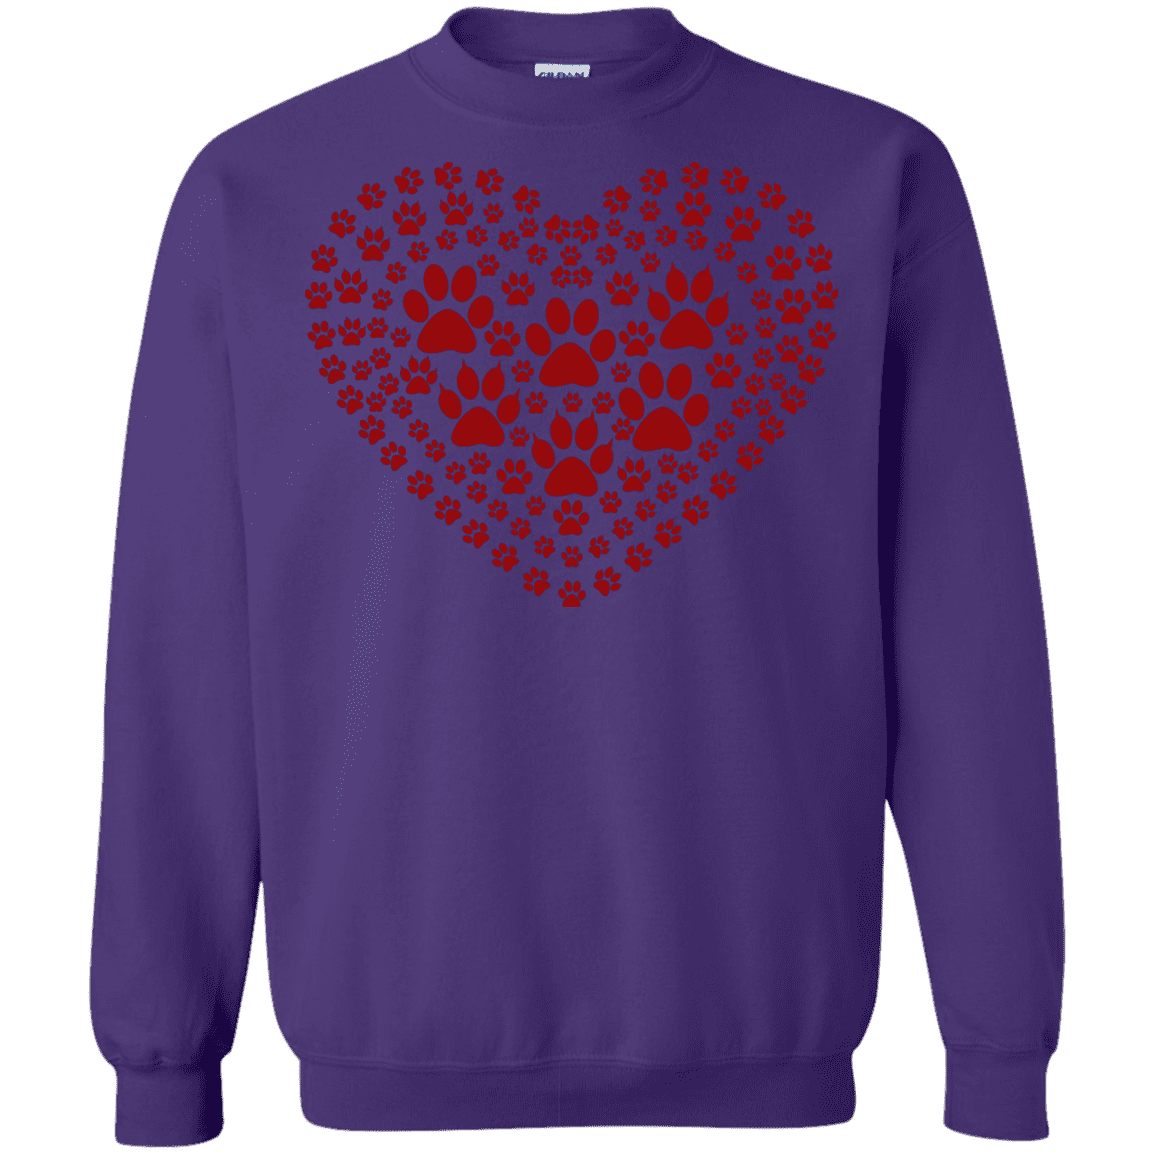 Pawprint Heart - Sweatshirt.